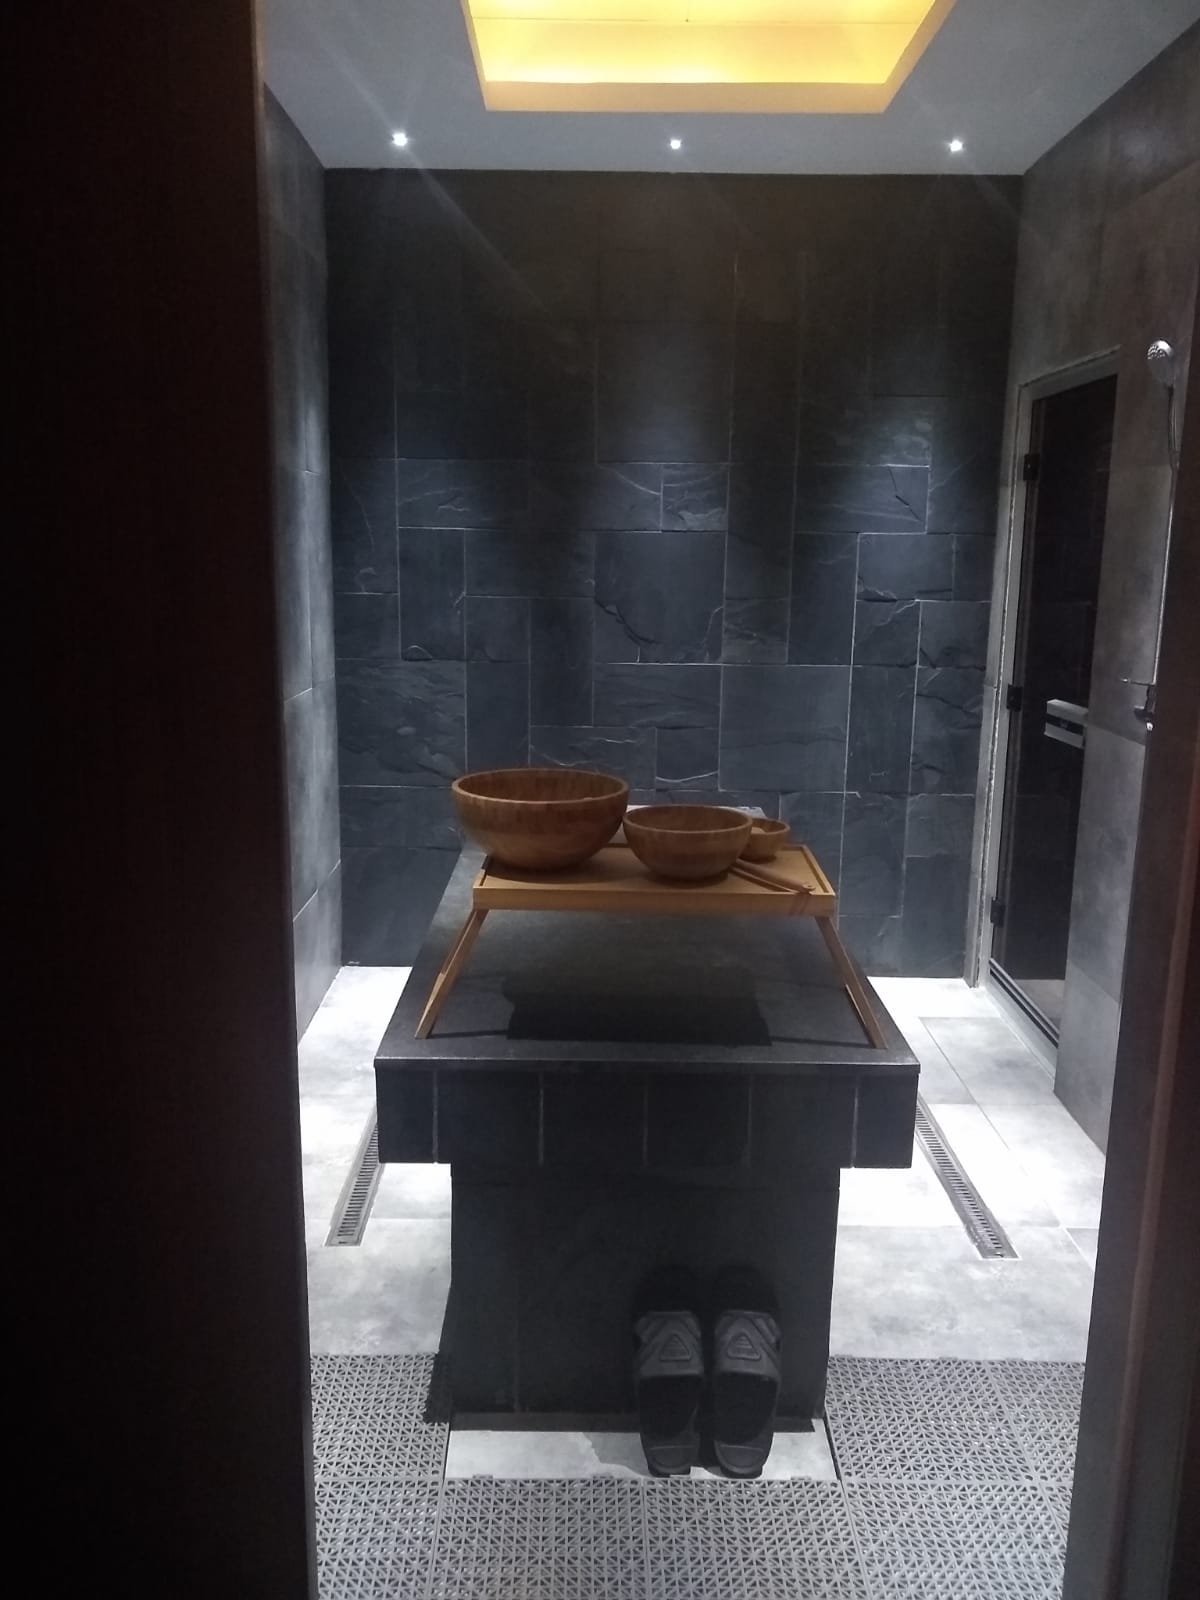 Photograph of moroccan bath massage table